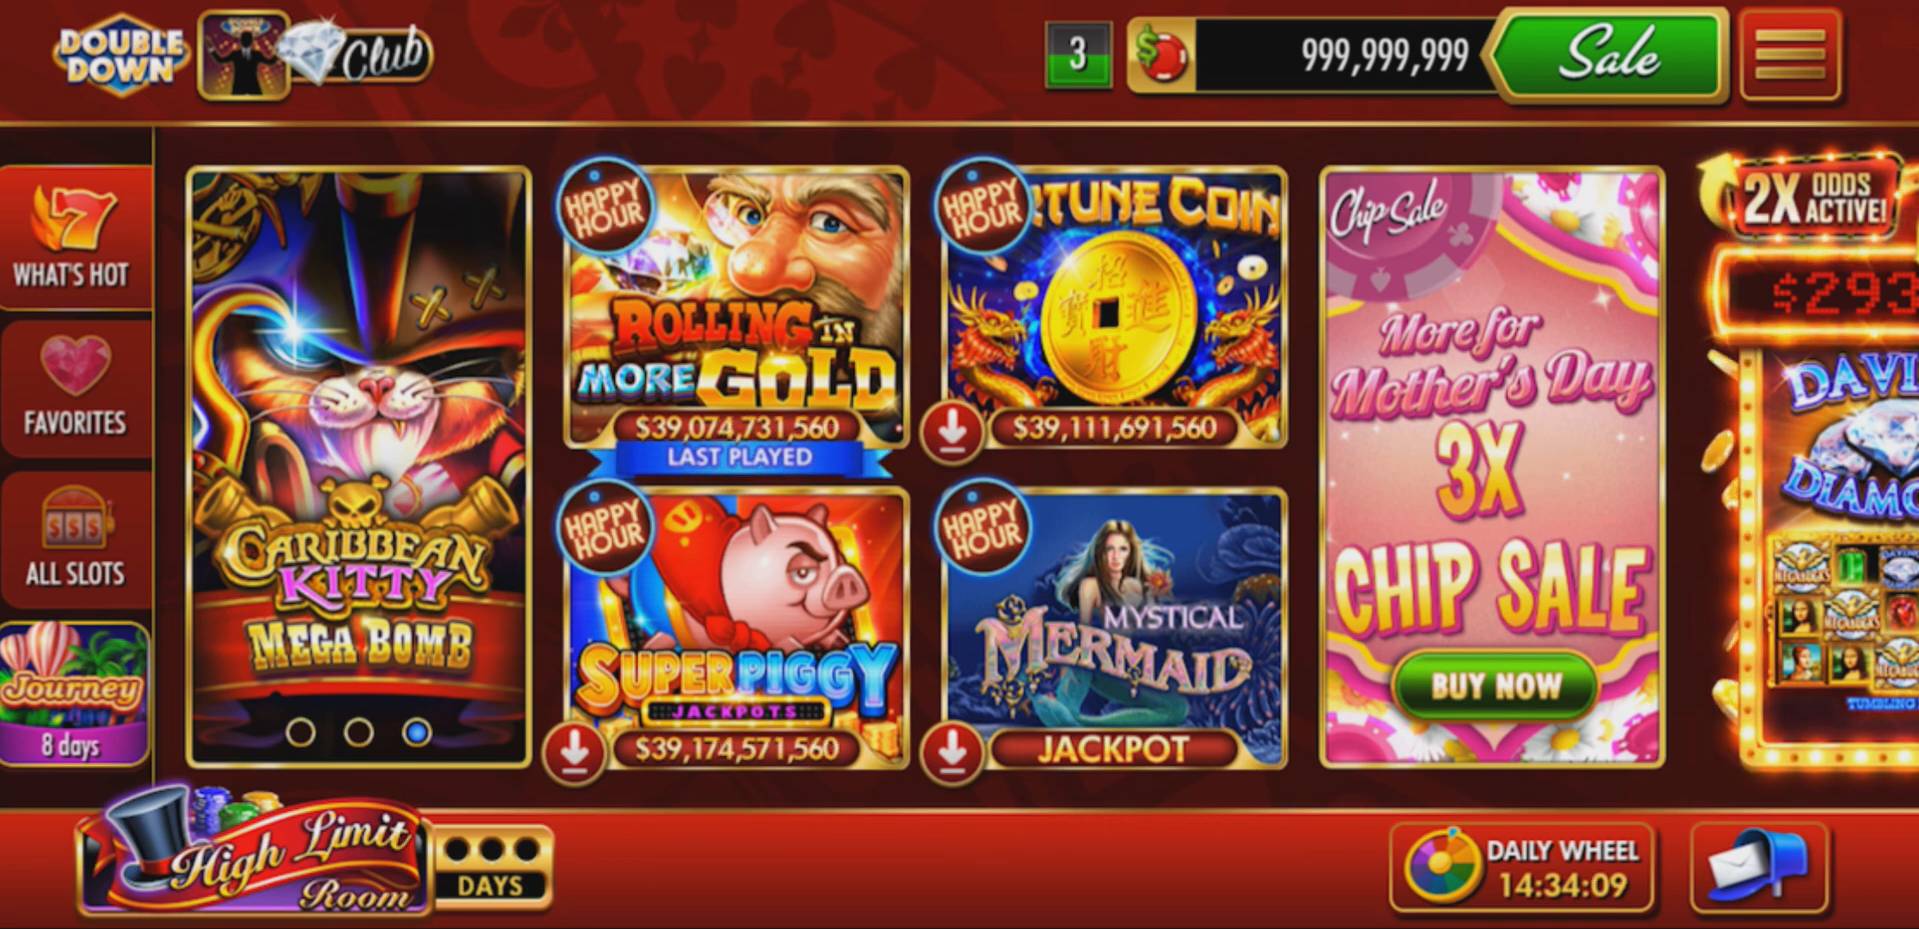 doubledown casino cheats v2 2150